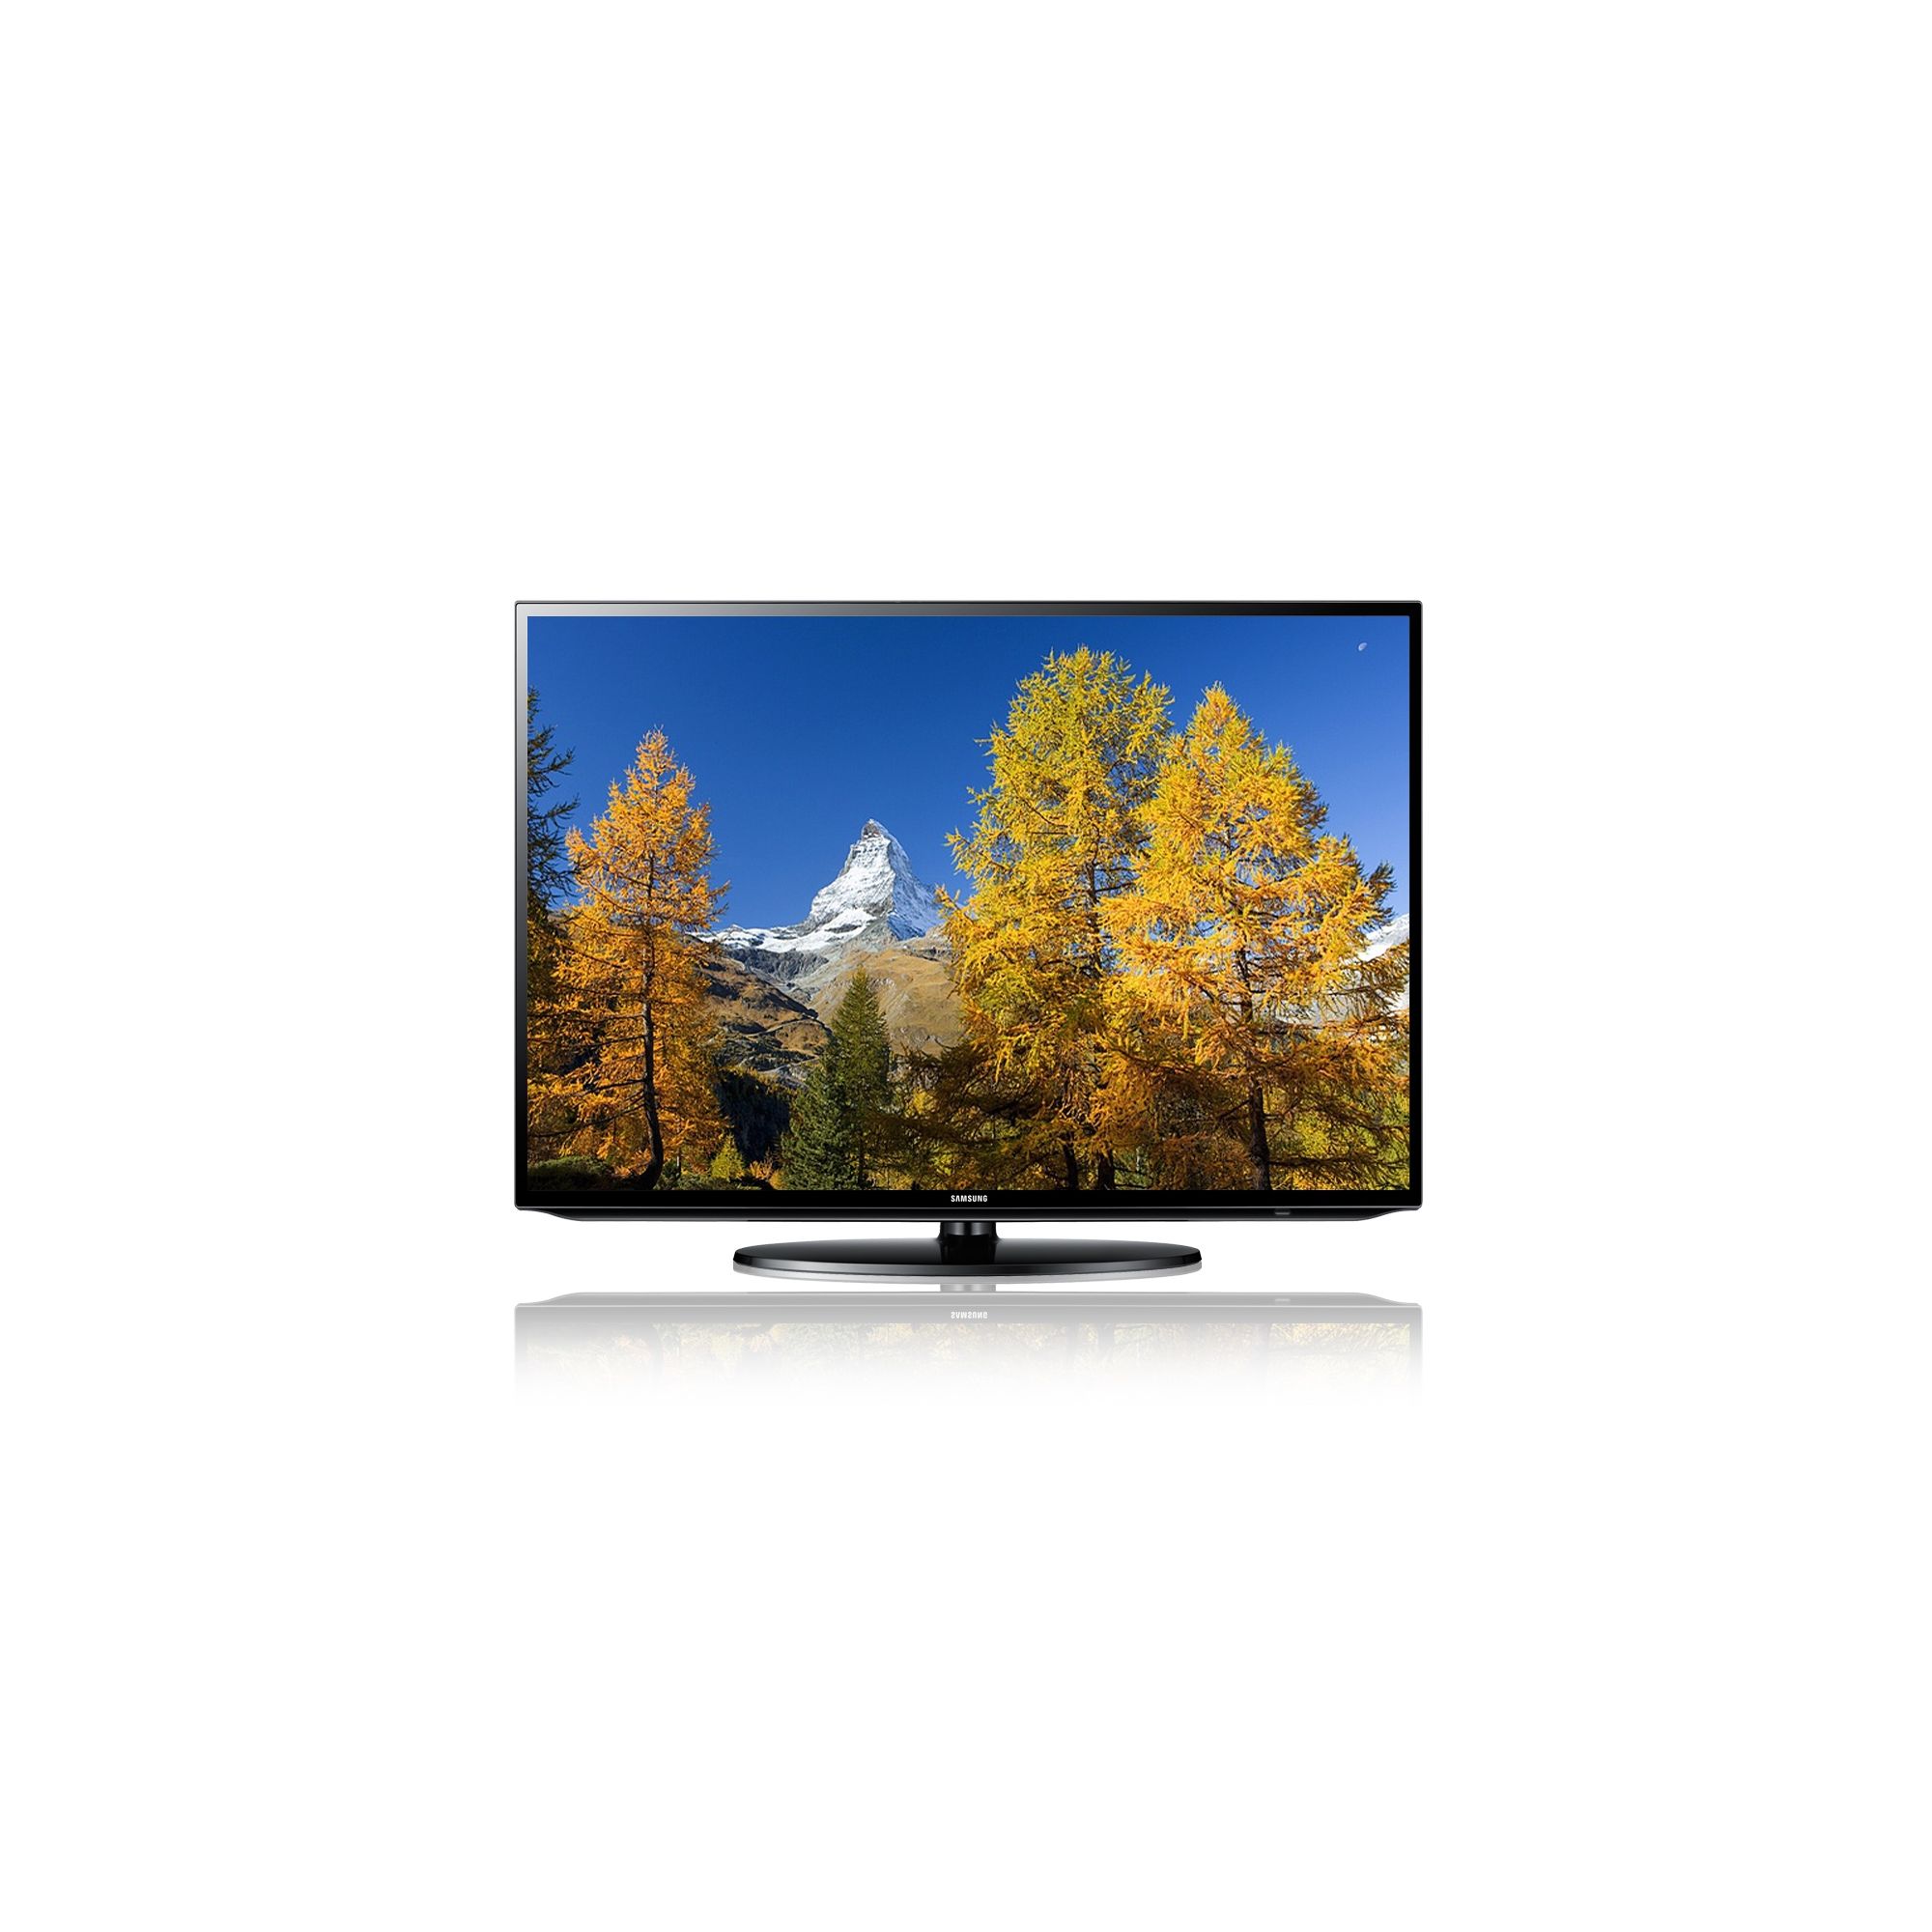 Samsung UE40EH5000 LED Television